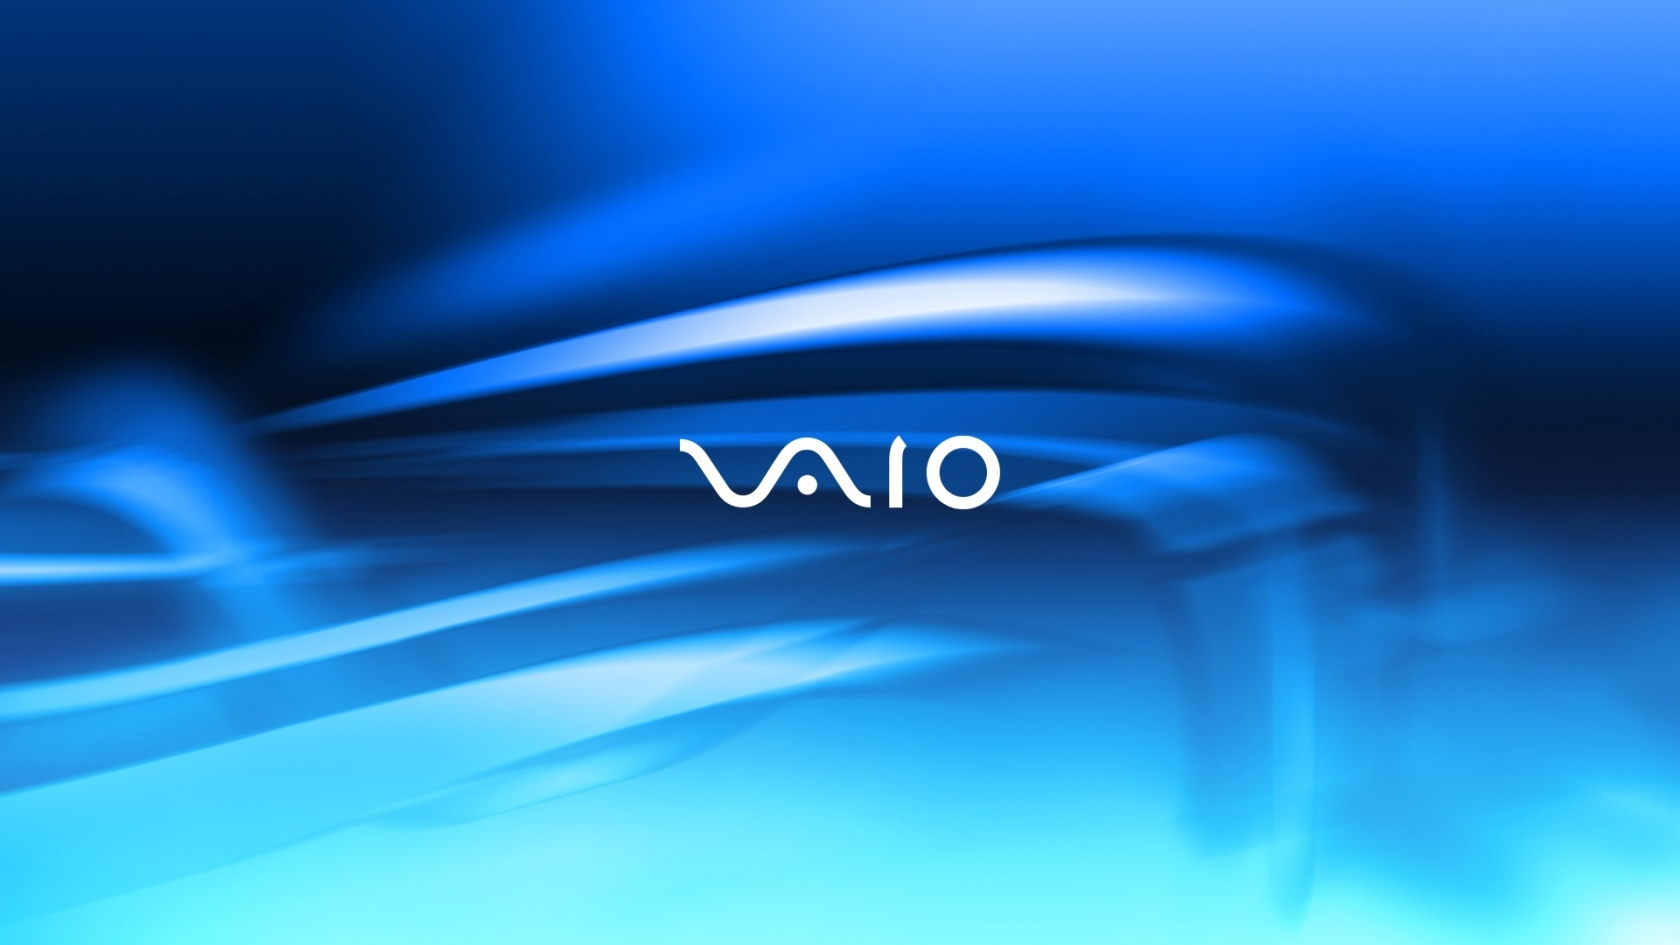 Vaio light blue for 1680 x 945 HDTV resolution